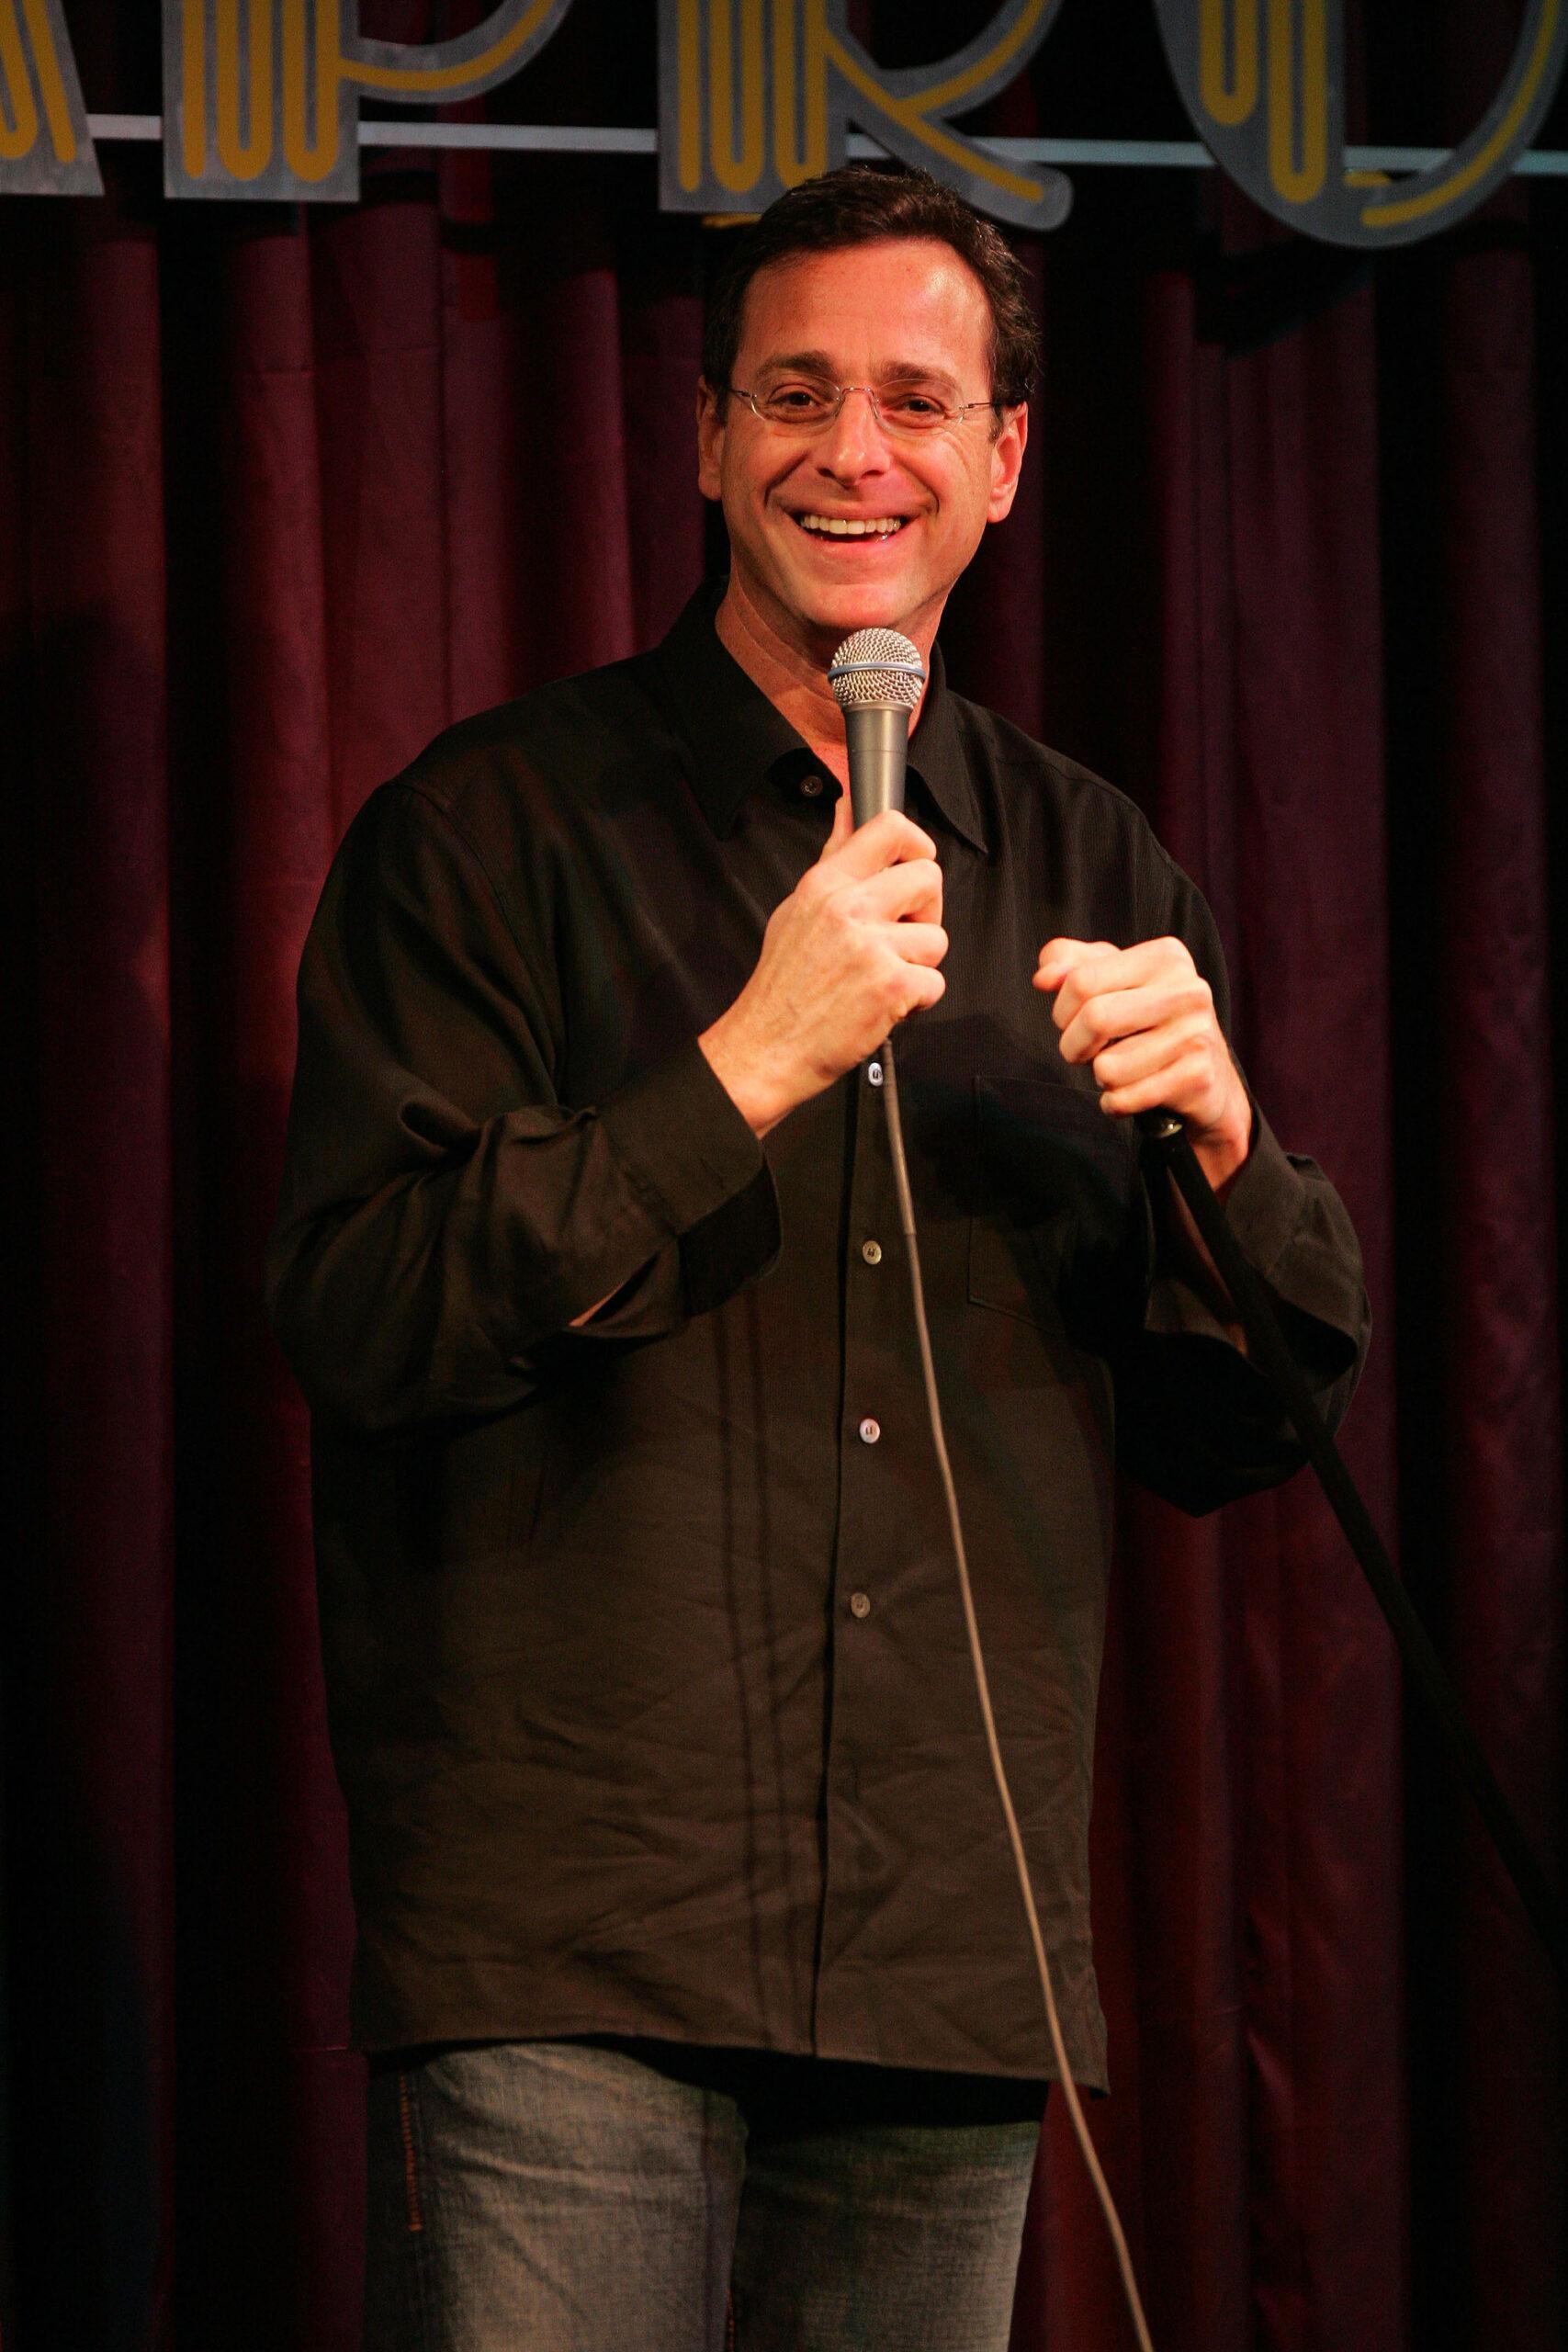 Bob Saget performs at the Improv Comedy Club